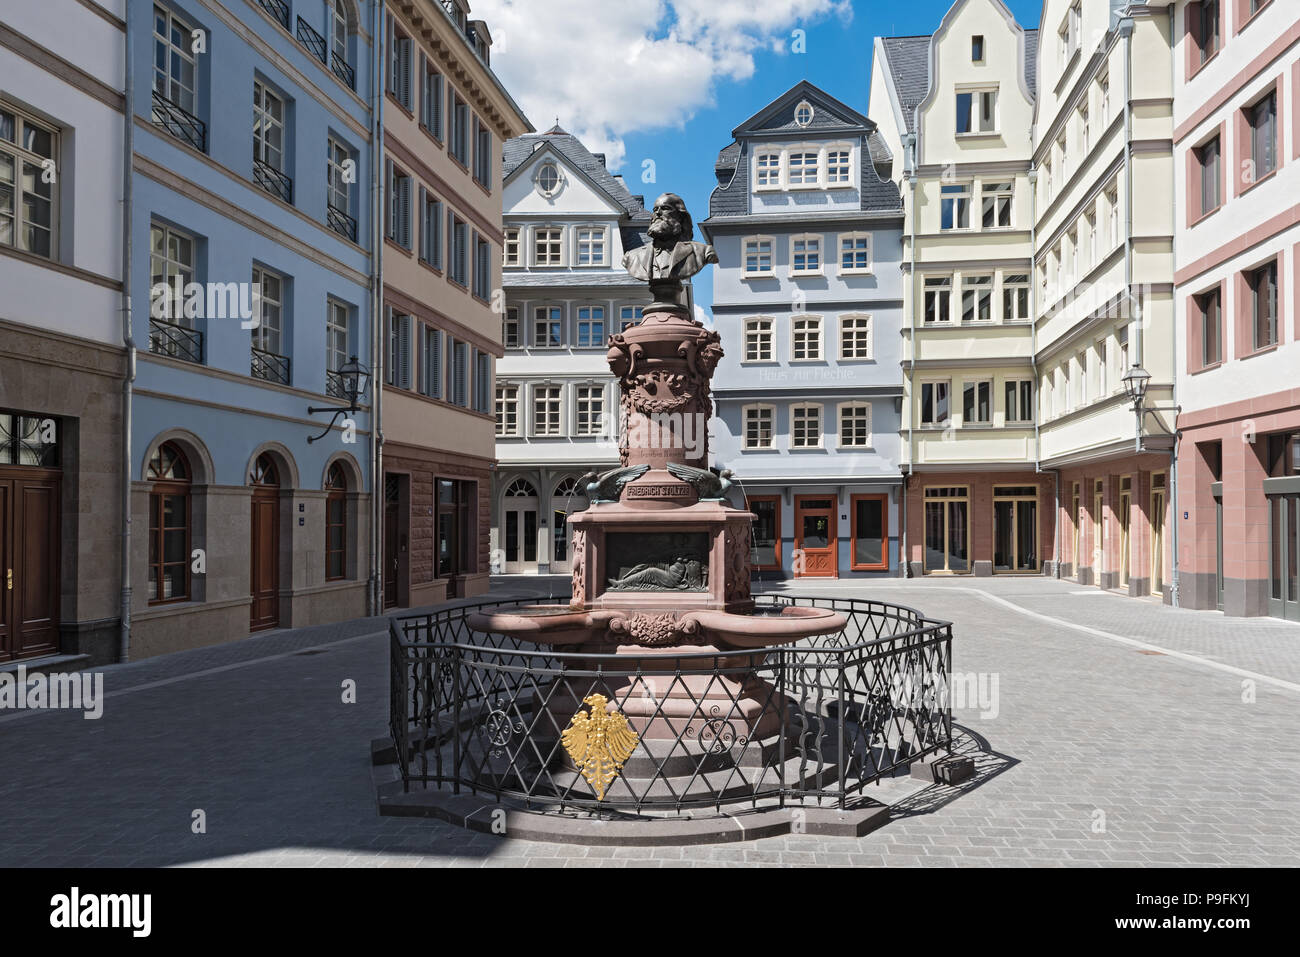 Neue Altstadt Stoltze Denkmal auf dem Huehnermarkt, Frankfurt, Deutschland. Stockfoto